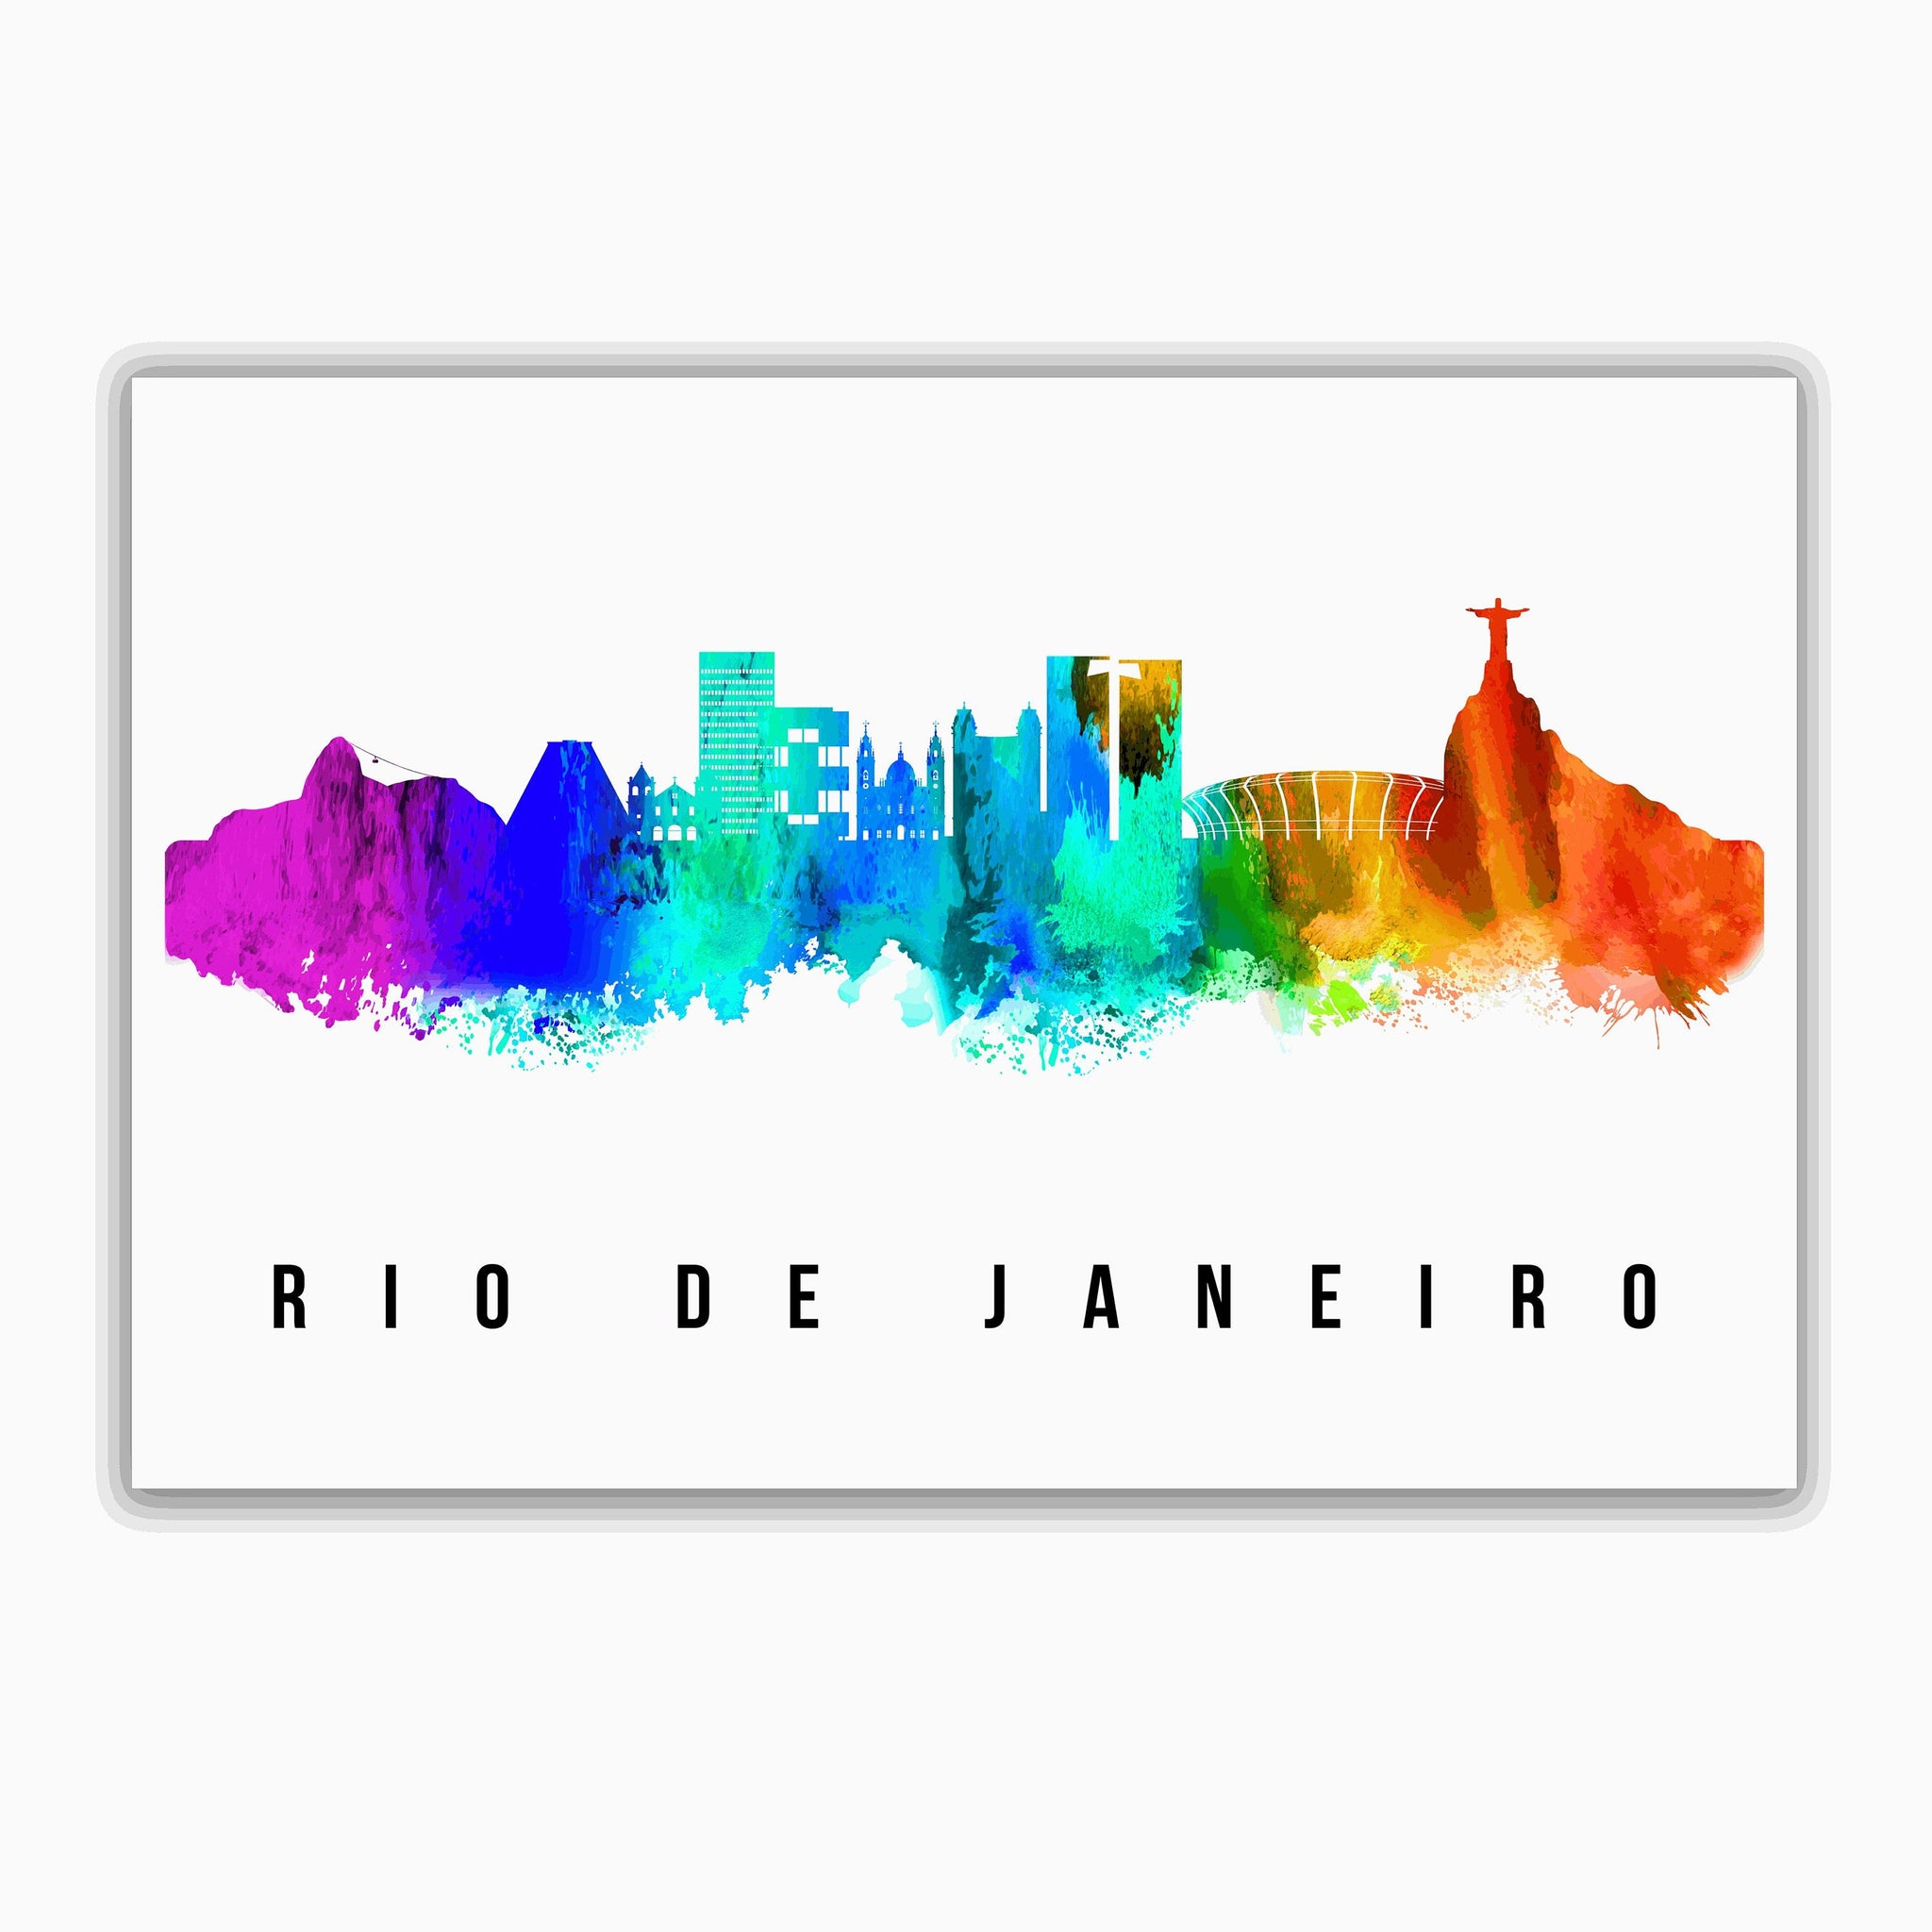 RIO DE JANEIRO - Brazil Poster, Skyline Poster Cityscape and Landmark Rio de Janeiro City Illustration Home Wall Art, Office Decor